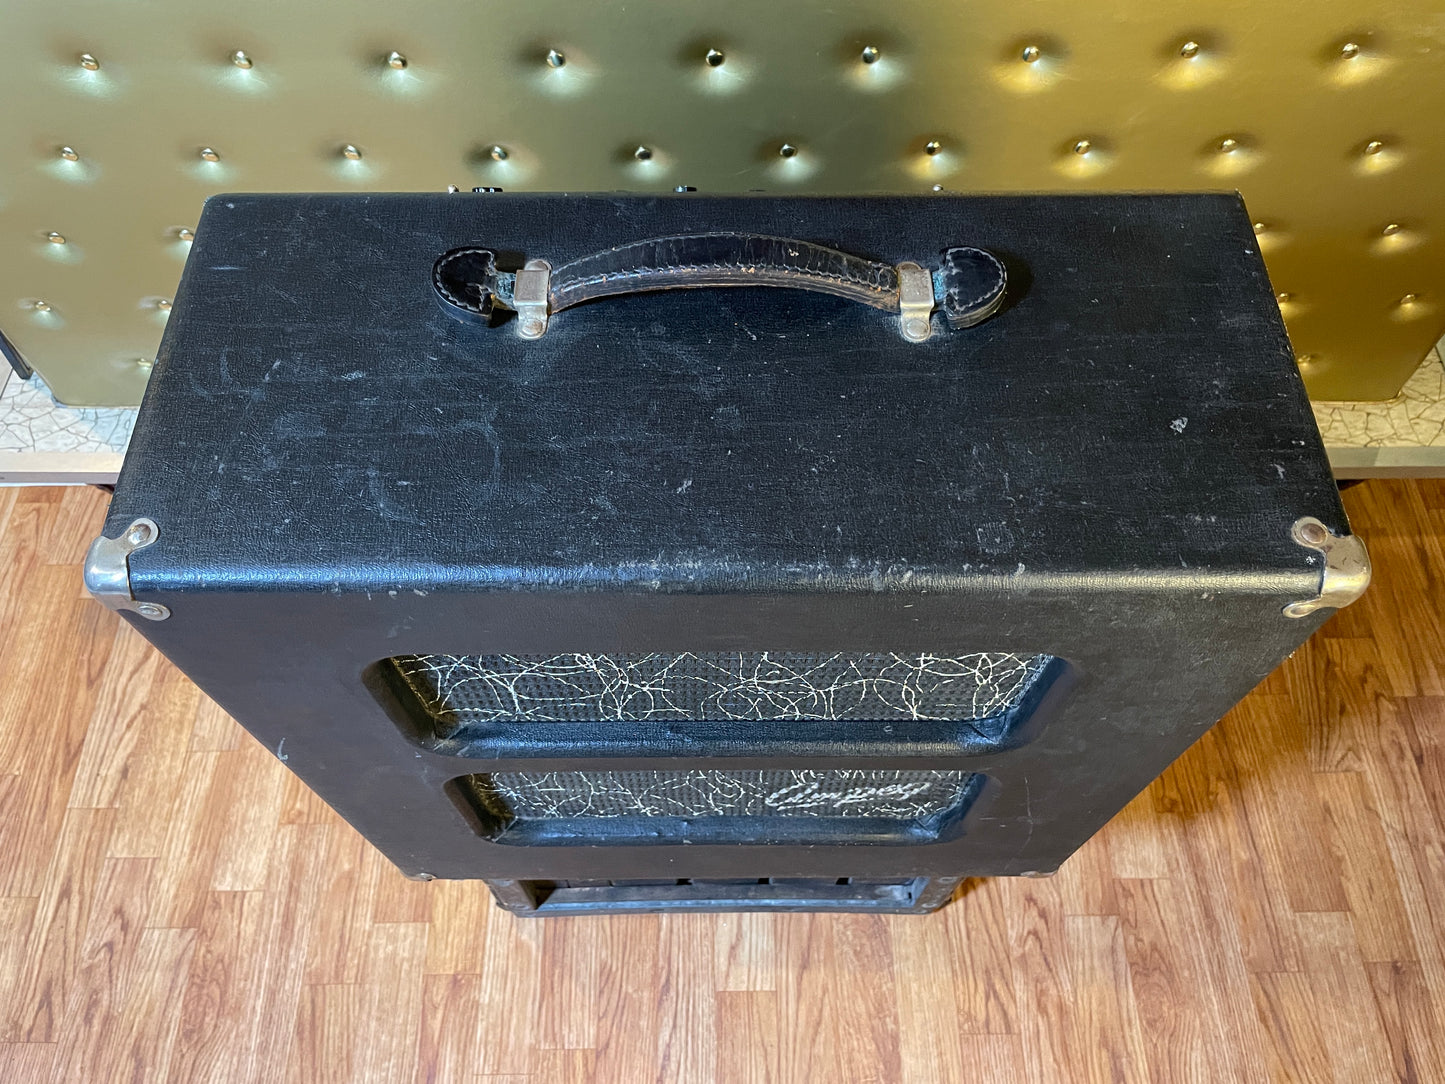 Early 1957 Ampeg Model 825 Bassamp Combo Bass Amplifier